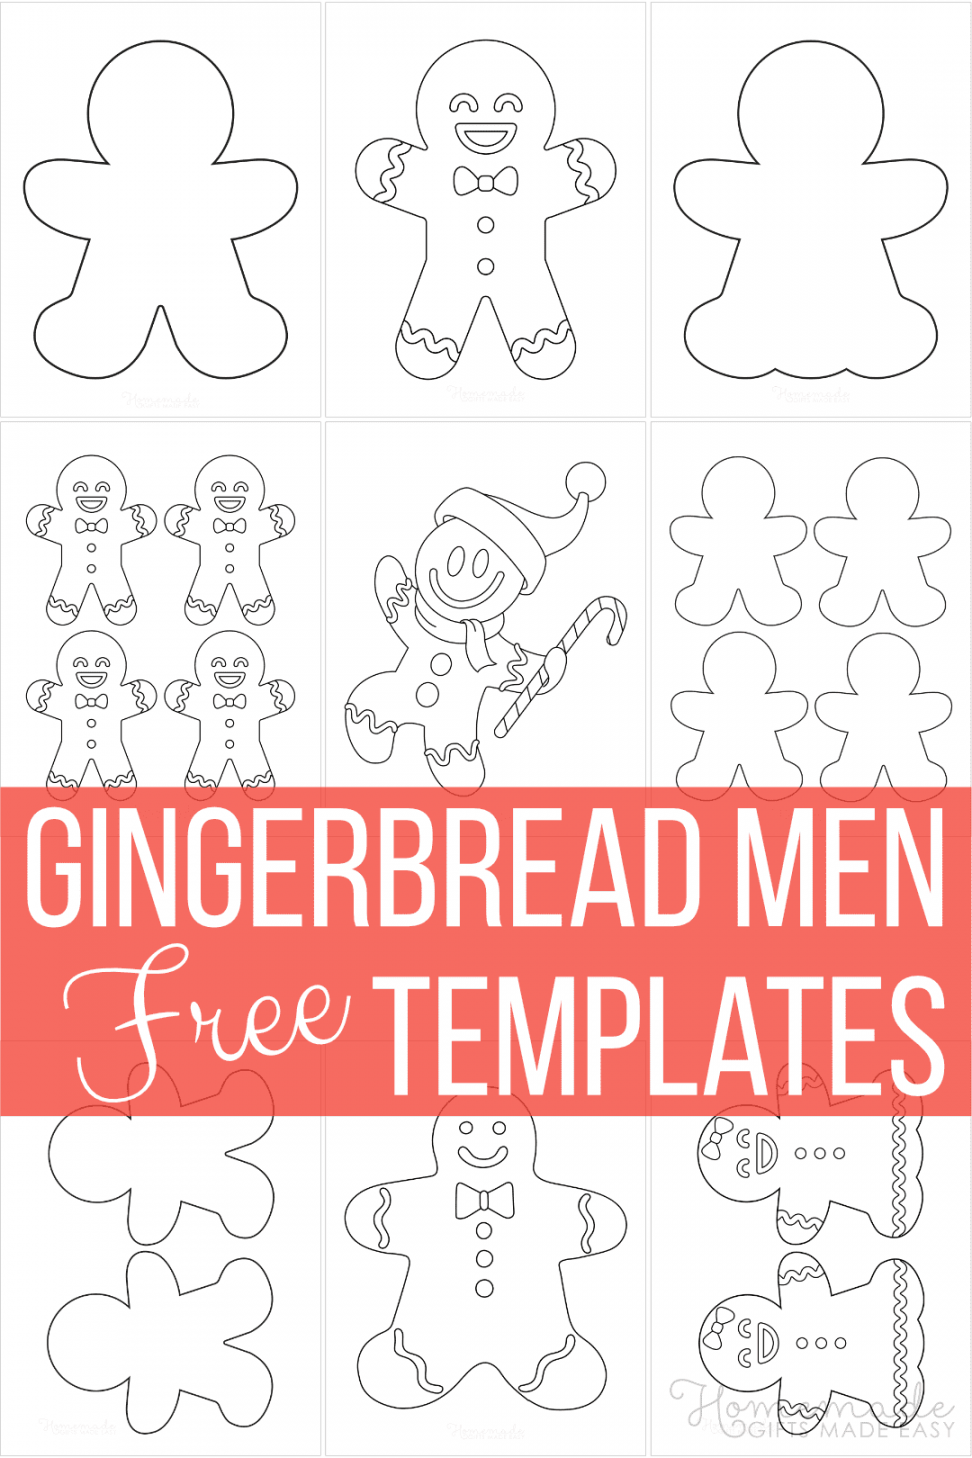 Free Printable Gingerbread Man Templates & Coloring Pages - FREE Printables - Gingerbread Template Printable